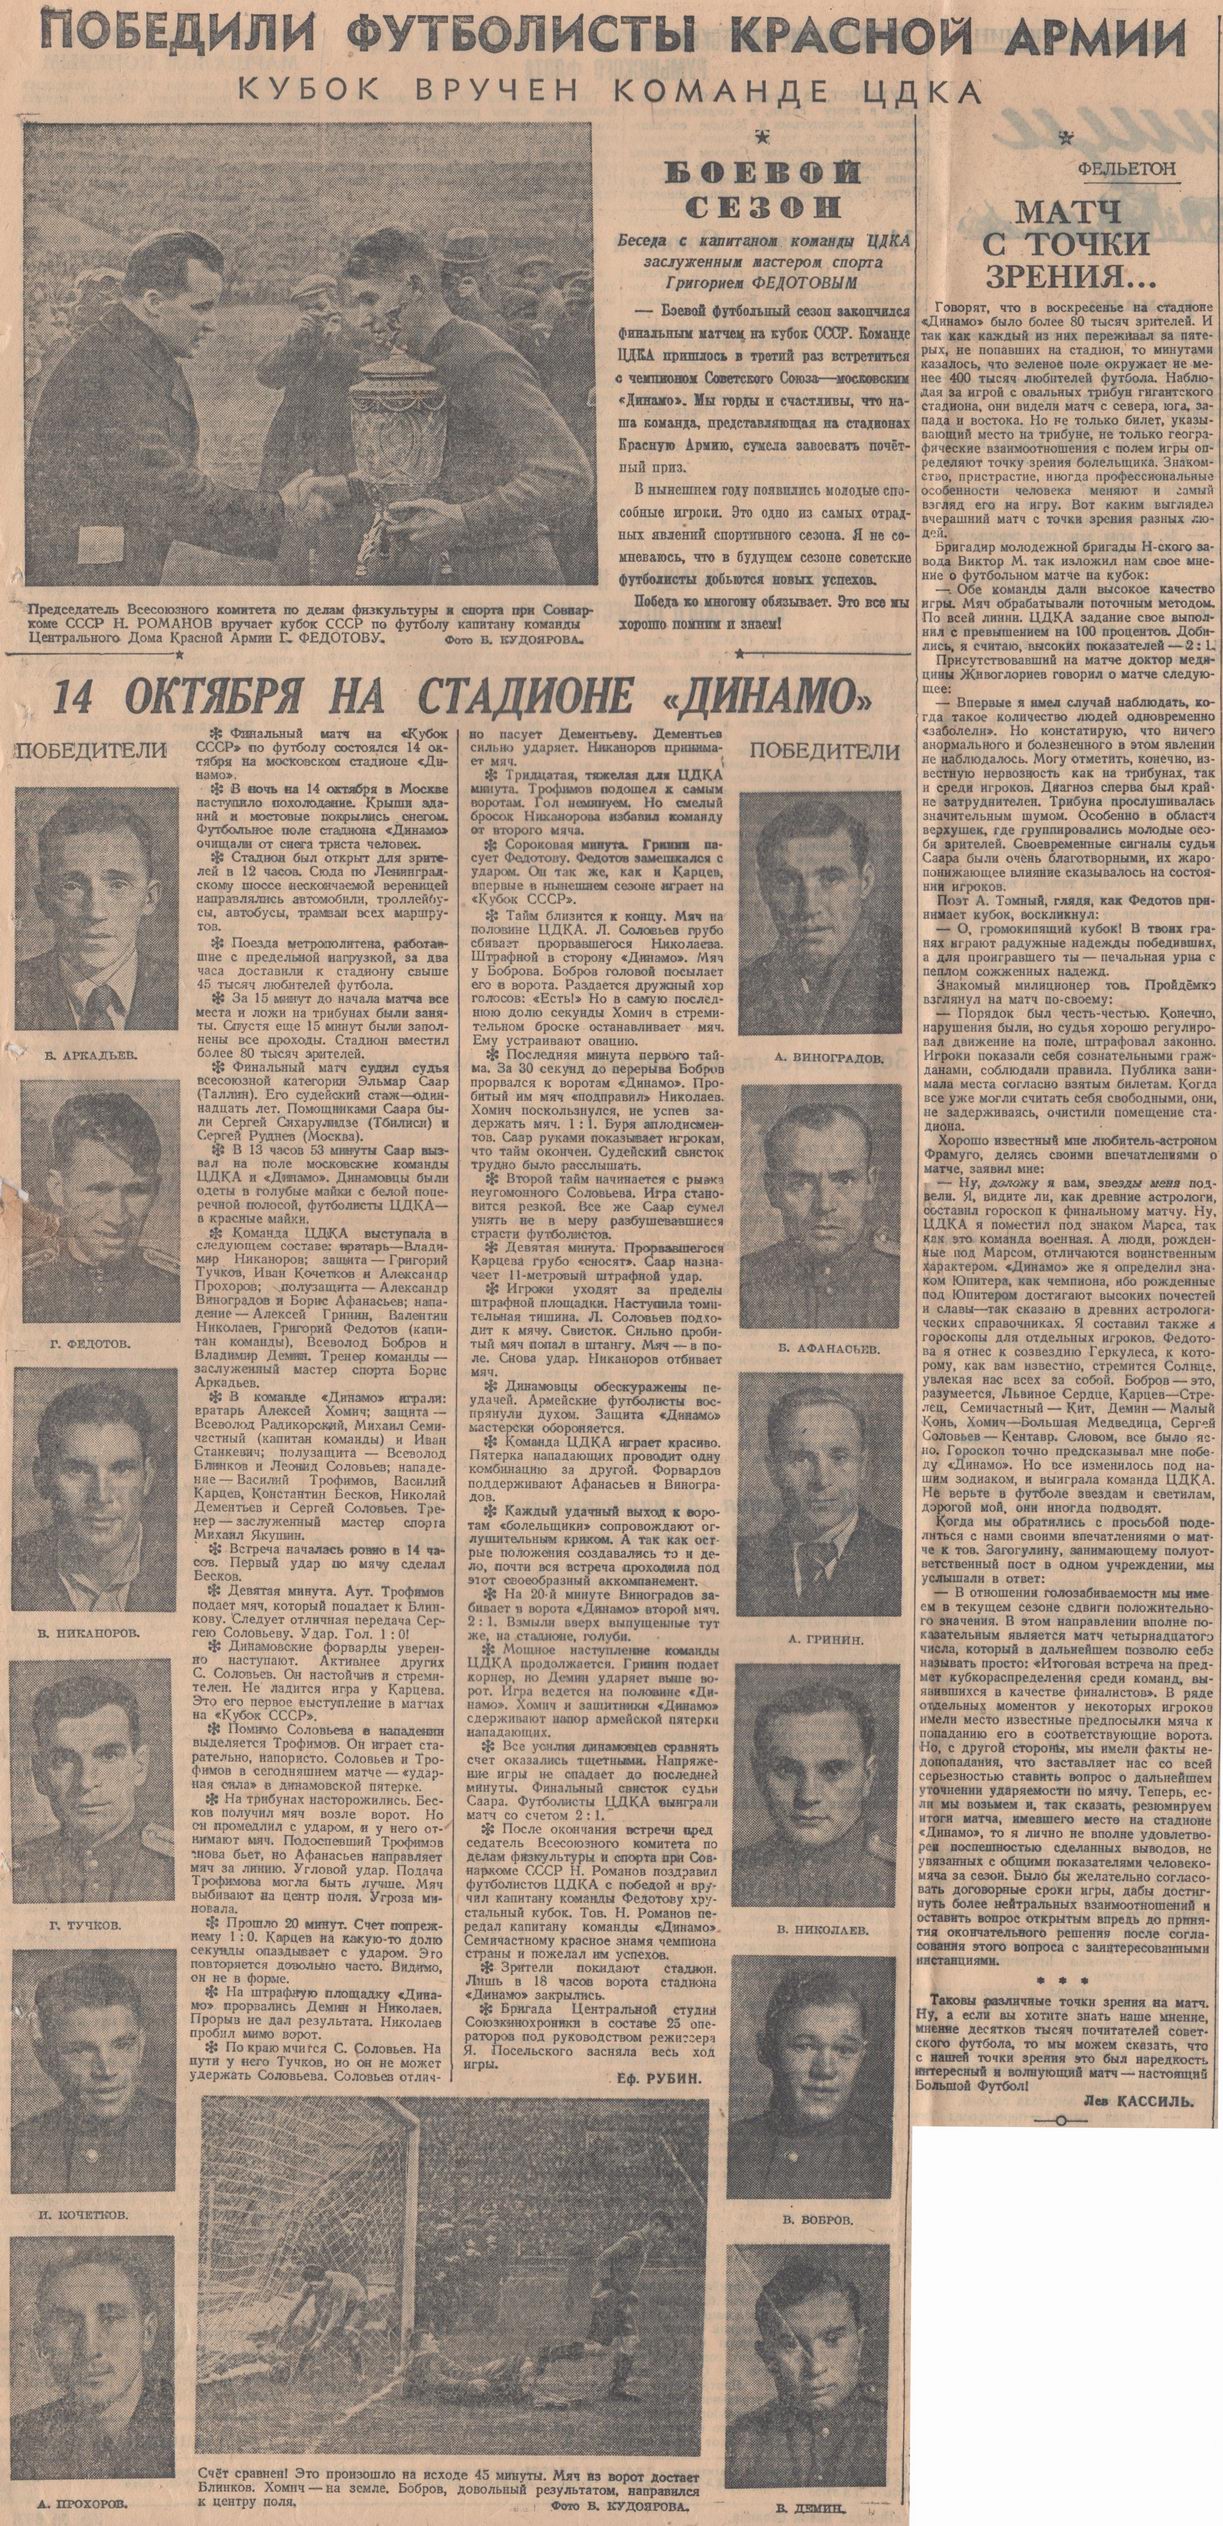 1945-10-14.CDKA-DinamoM.19